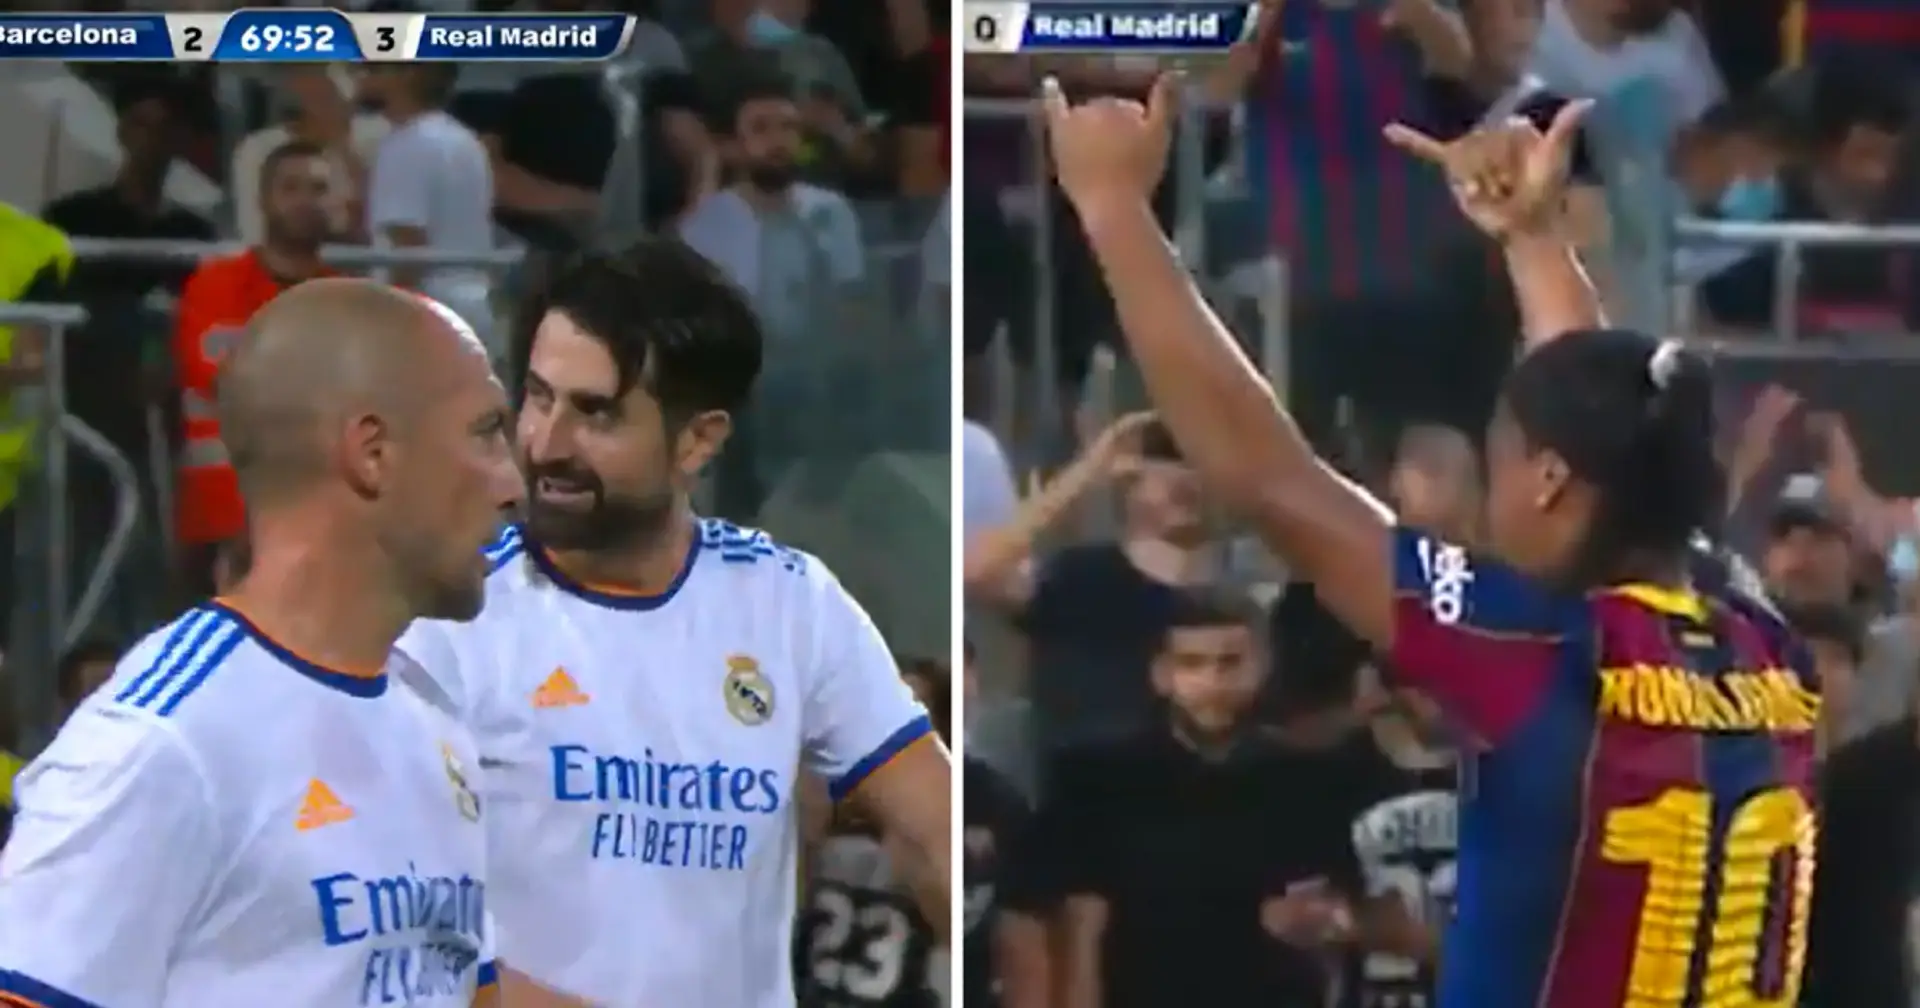 Real Madrid defeat Barcelona in entertaining El Clasico legends clash